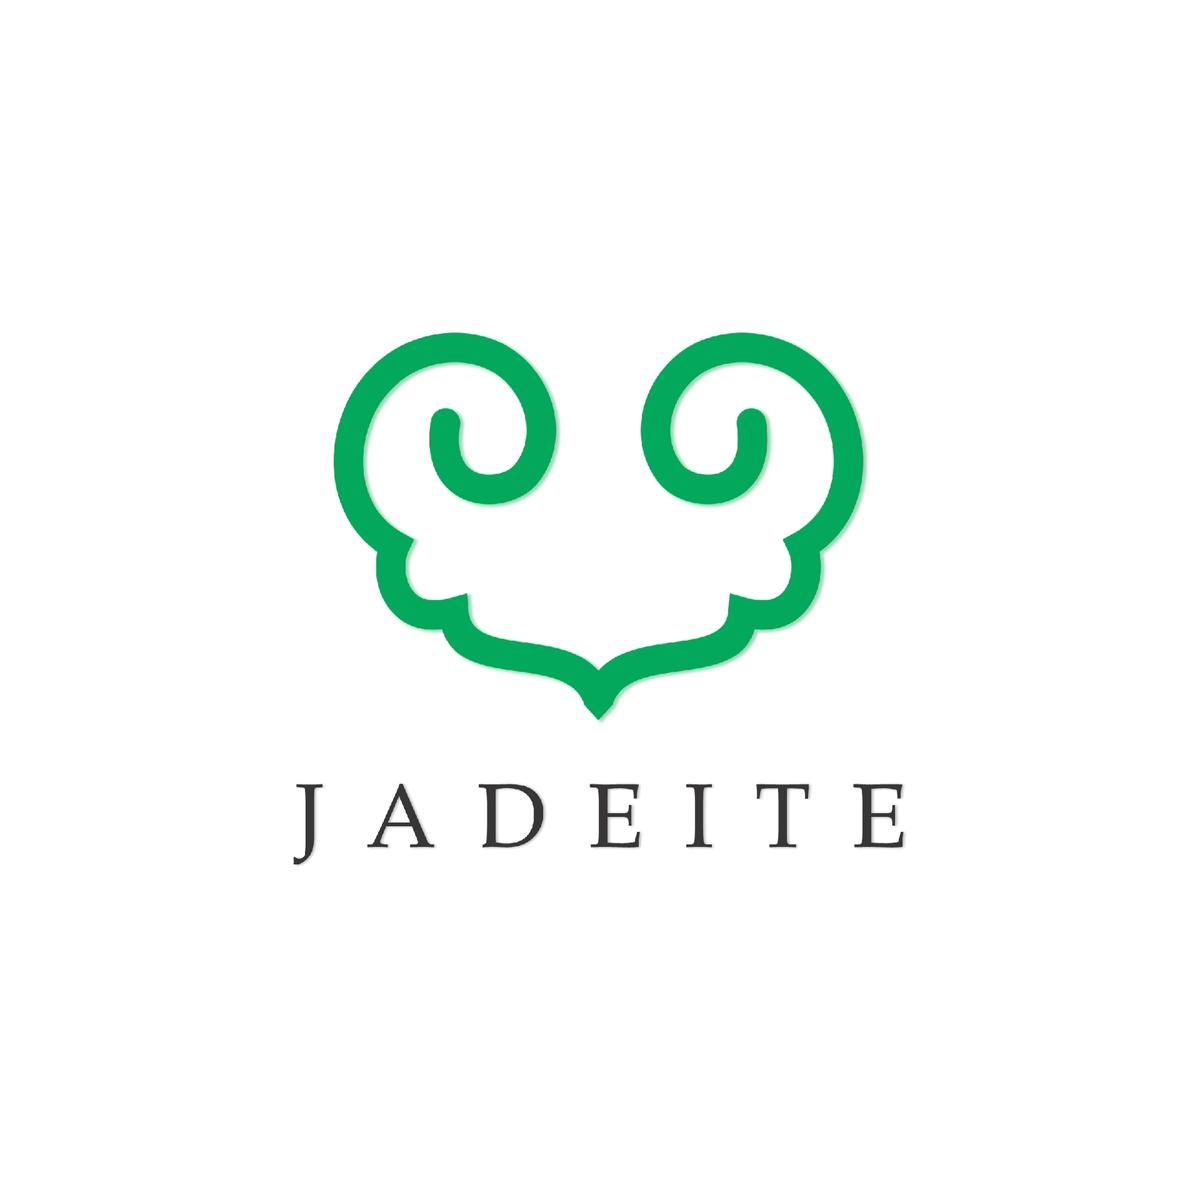 Love Jadeite's images